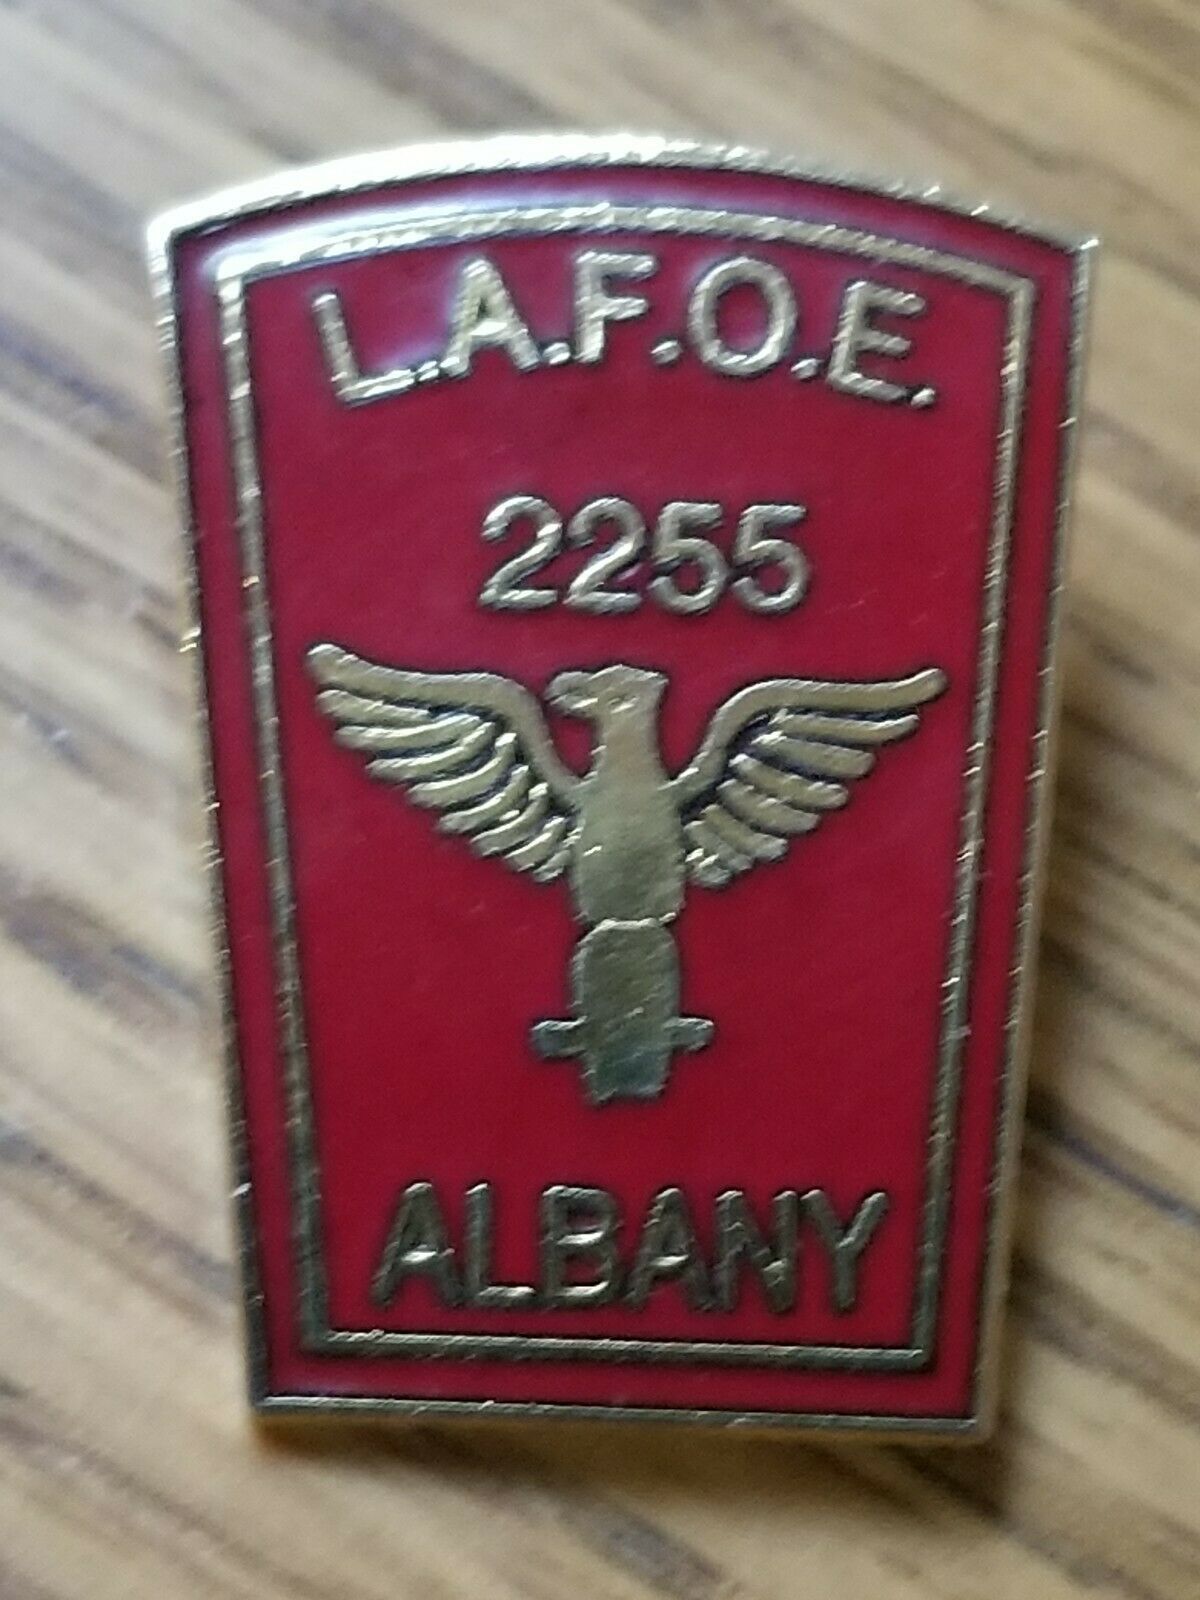 L.A.F.O.E. pins #2255 ALBANY  Fraternal Order of Eagles 1E